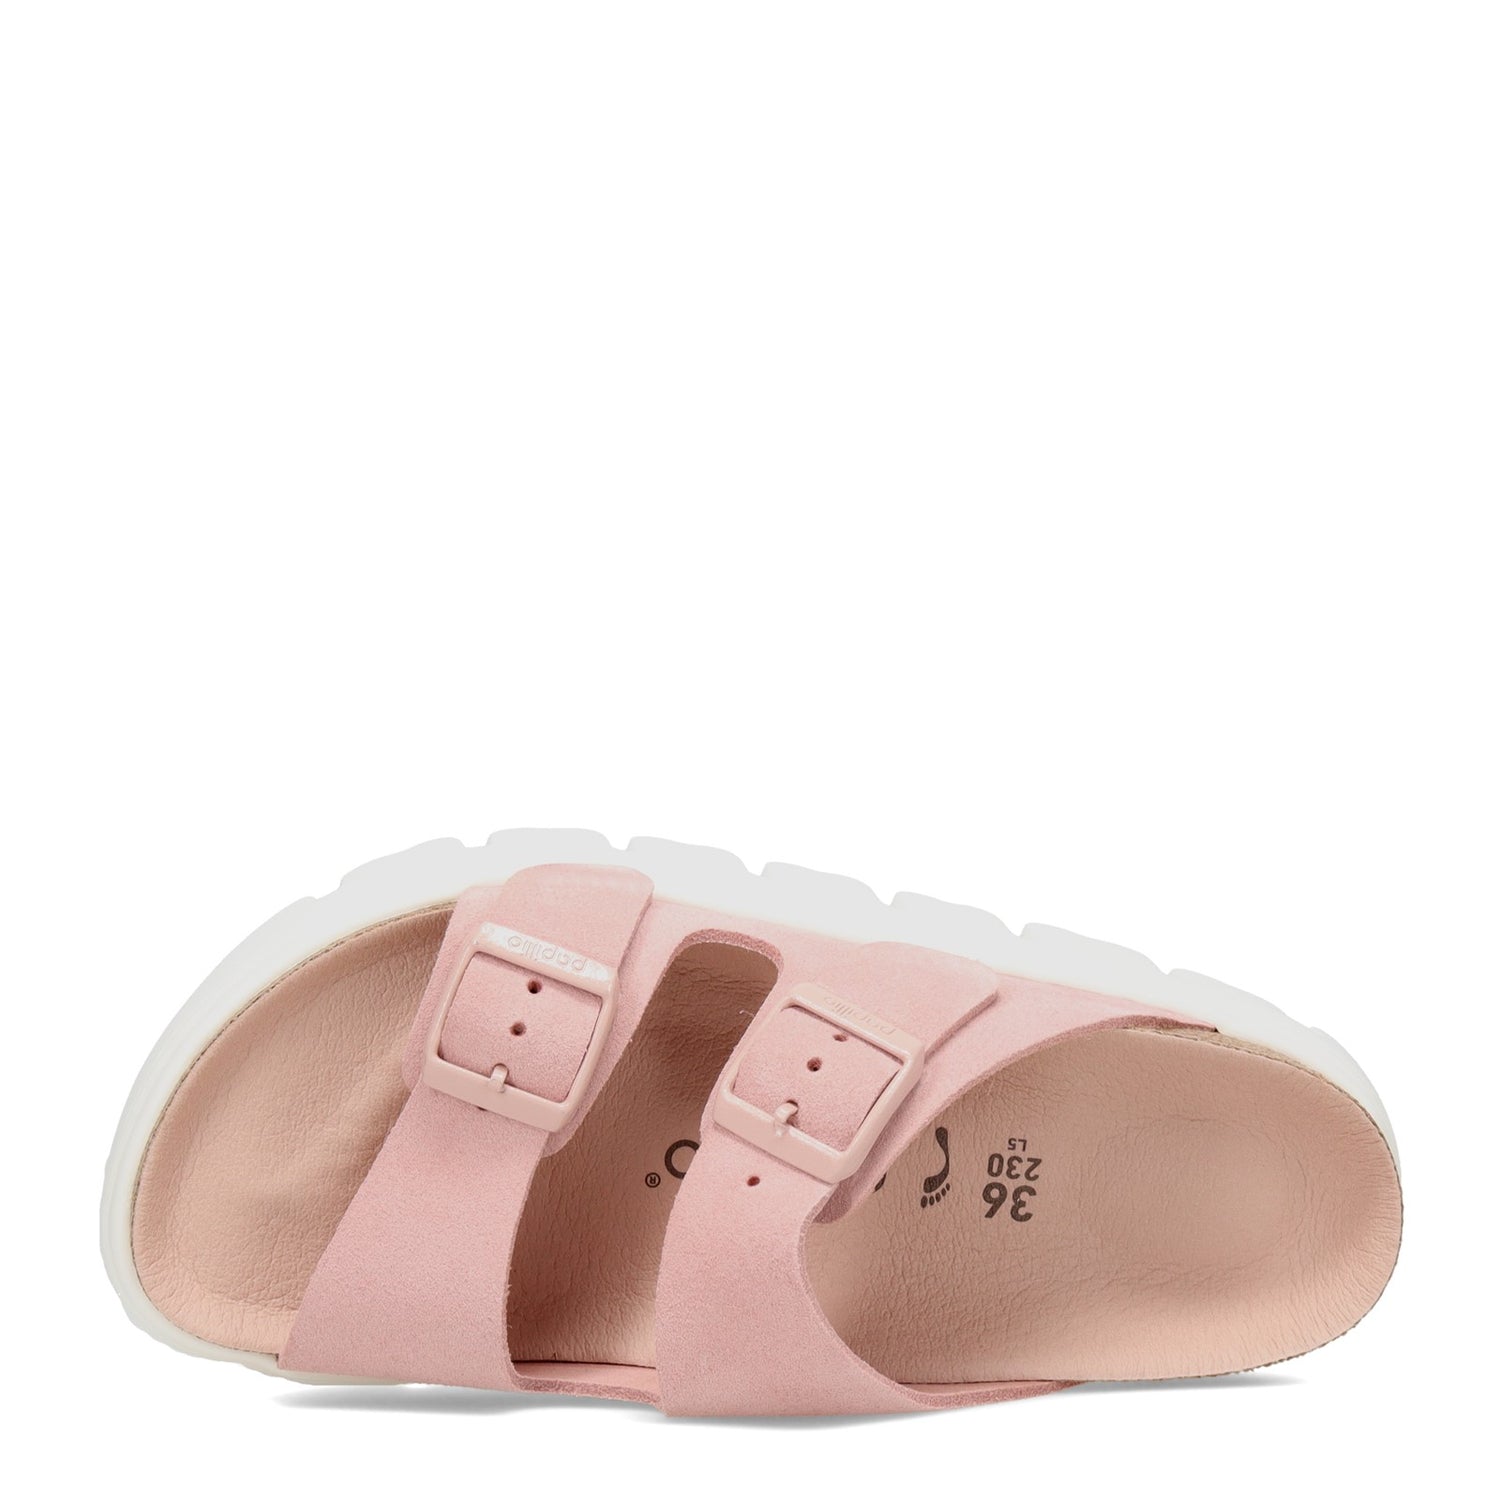 Peltz Shoes  Women's Birkenstock Arizona Chunky Sandal - Narrow Fit PINK SUEDE 1018 725 N